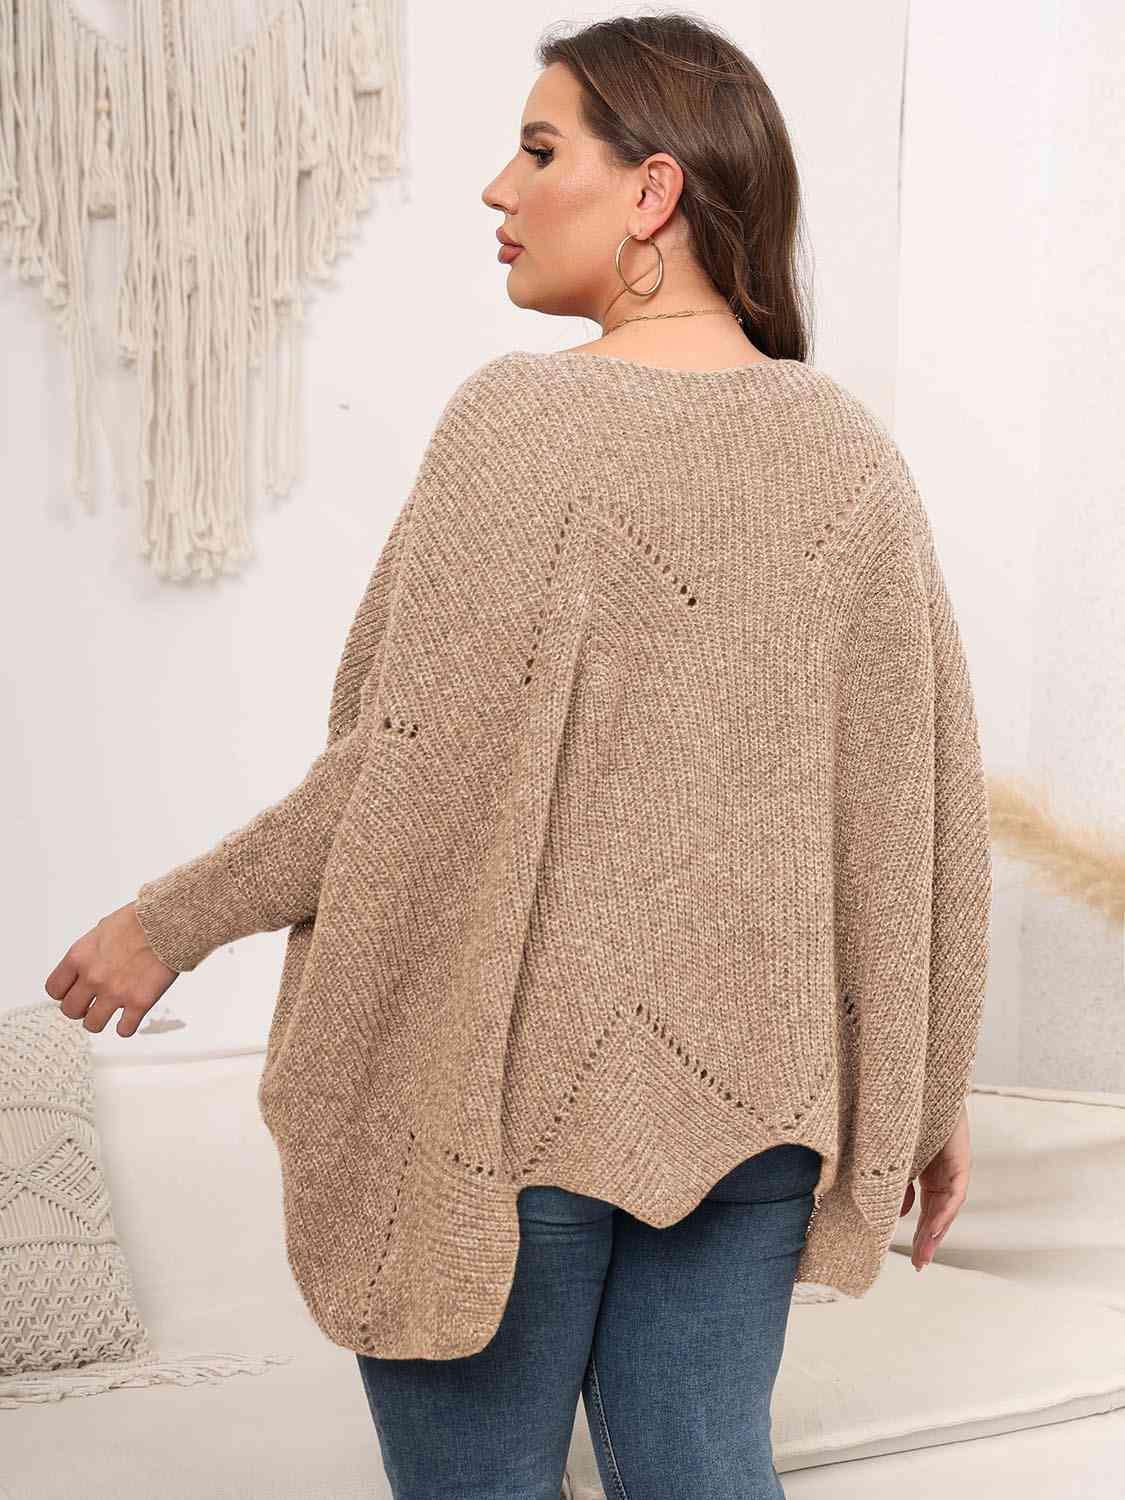 Flourishing Women's Plus Size Batwing Sweater - MXSTUDIO.COM